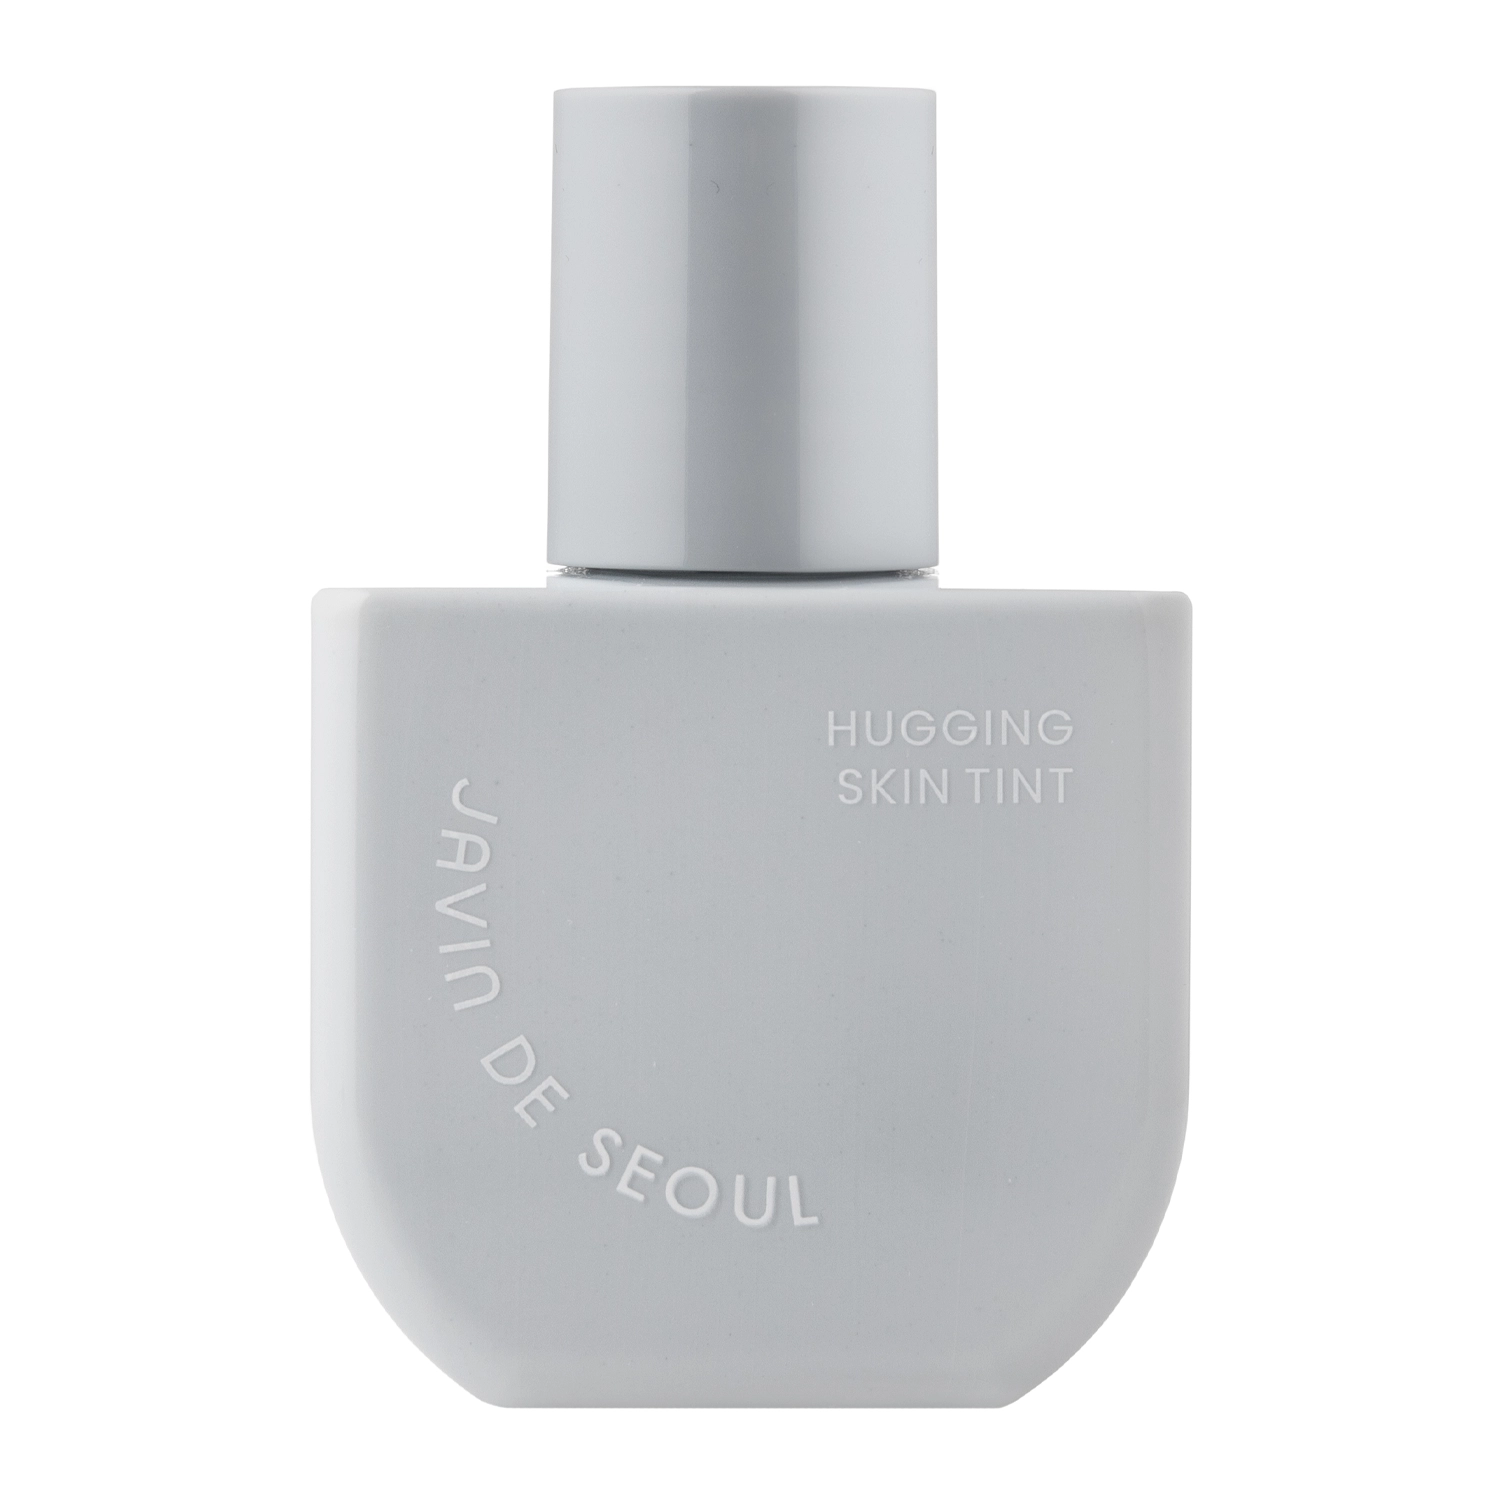 Javin De Seoul - Hugging Skin Tint - Увлажняющий тинт для лица - 01 Airy Bloom - 55g